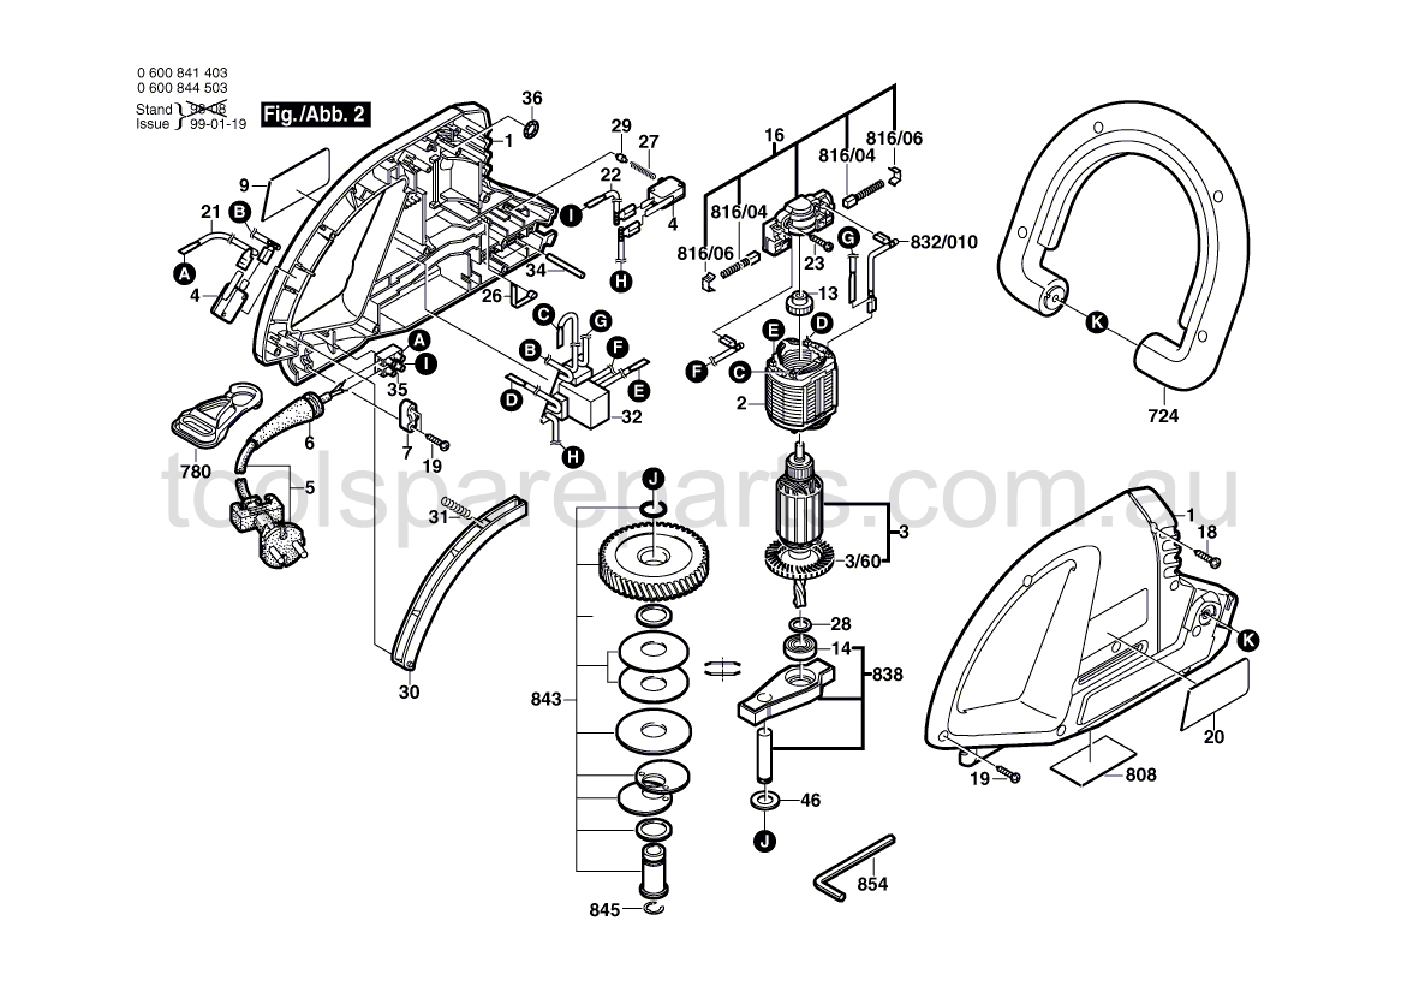 Bosch AHS 55-22 0600844537  Diagram 1